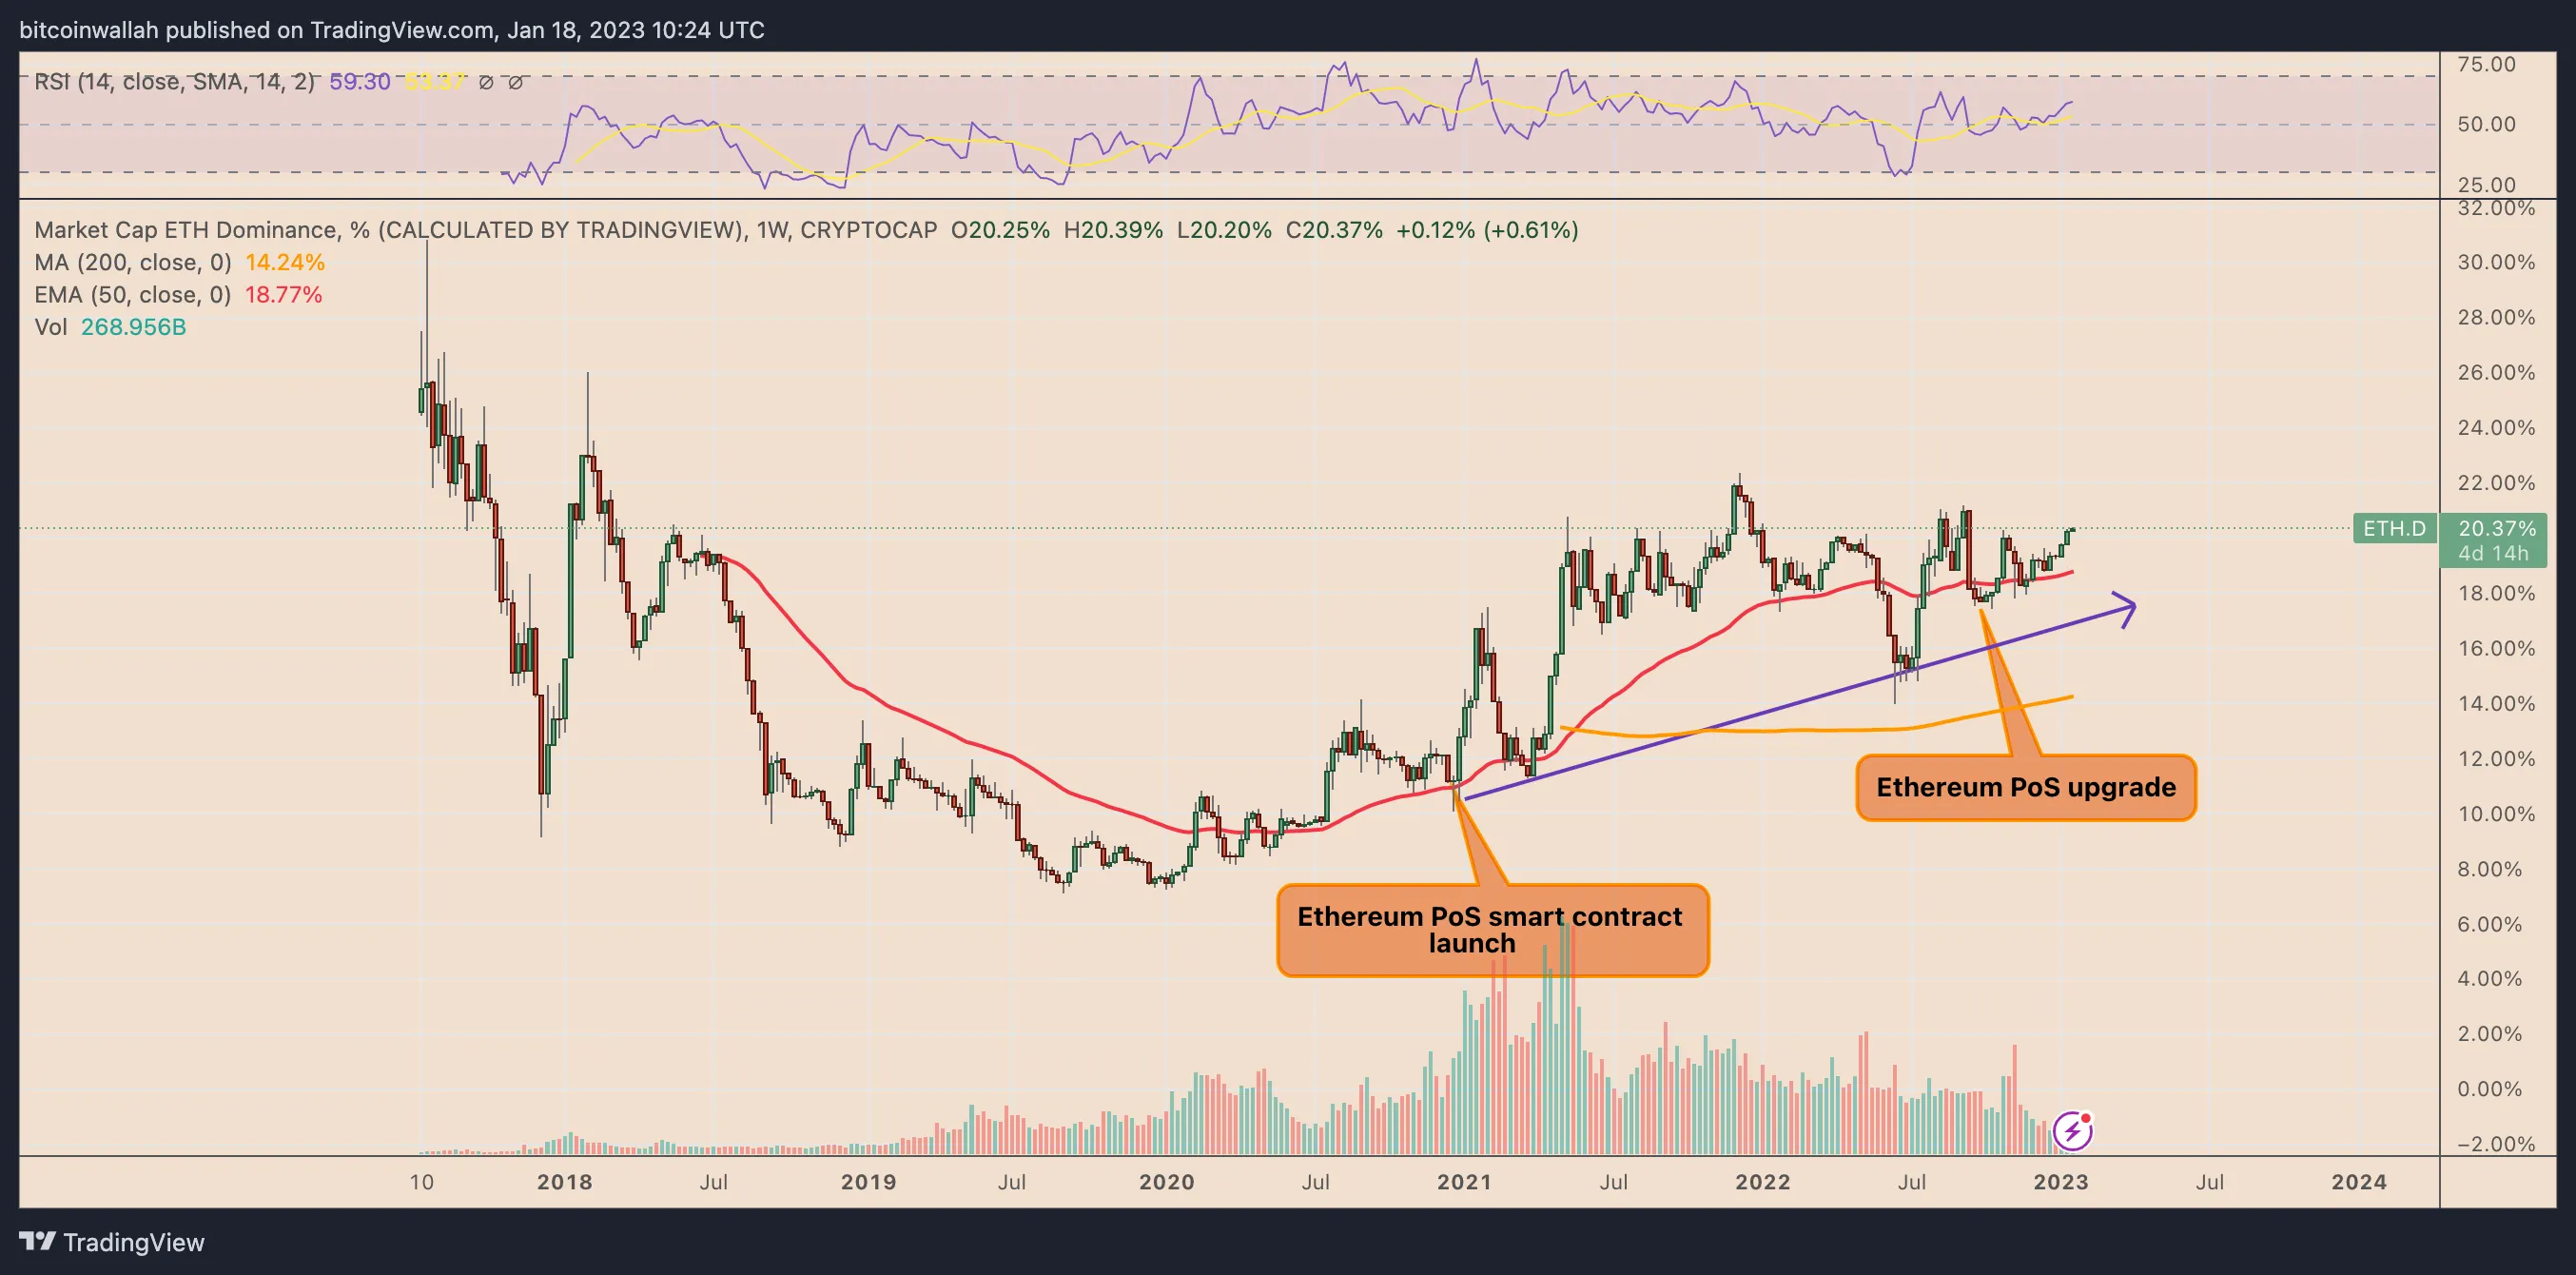 ETH dominance 1W chart. Source - TradingView